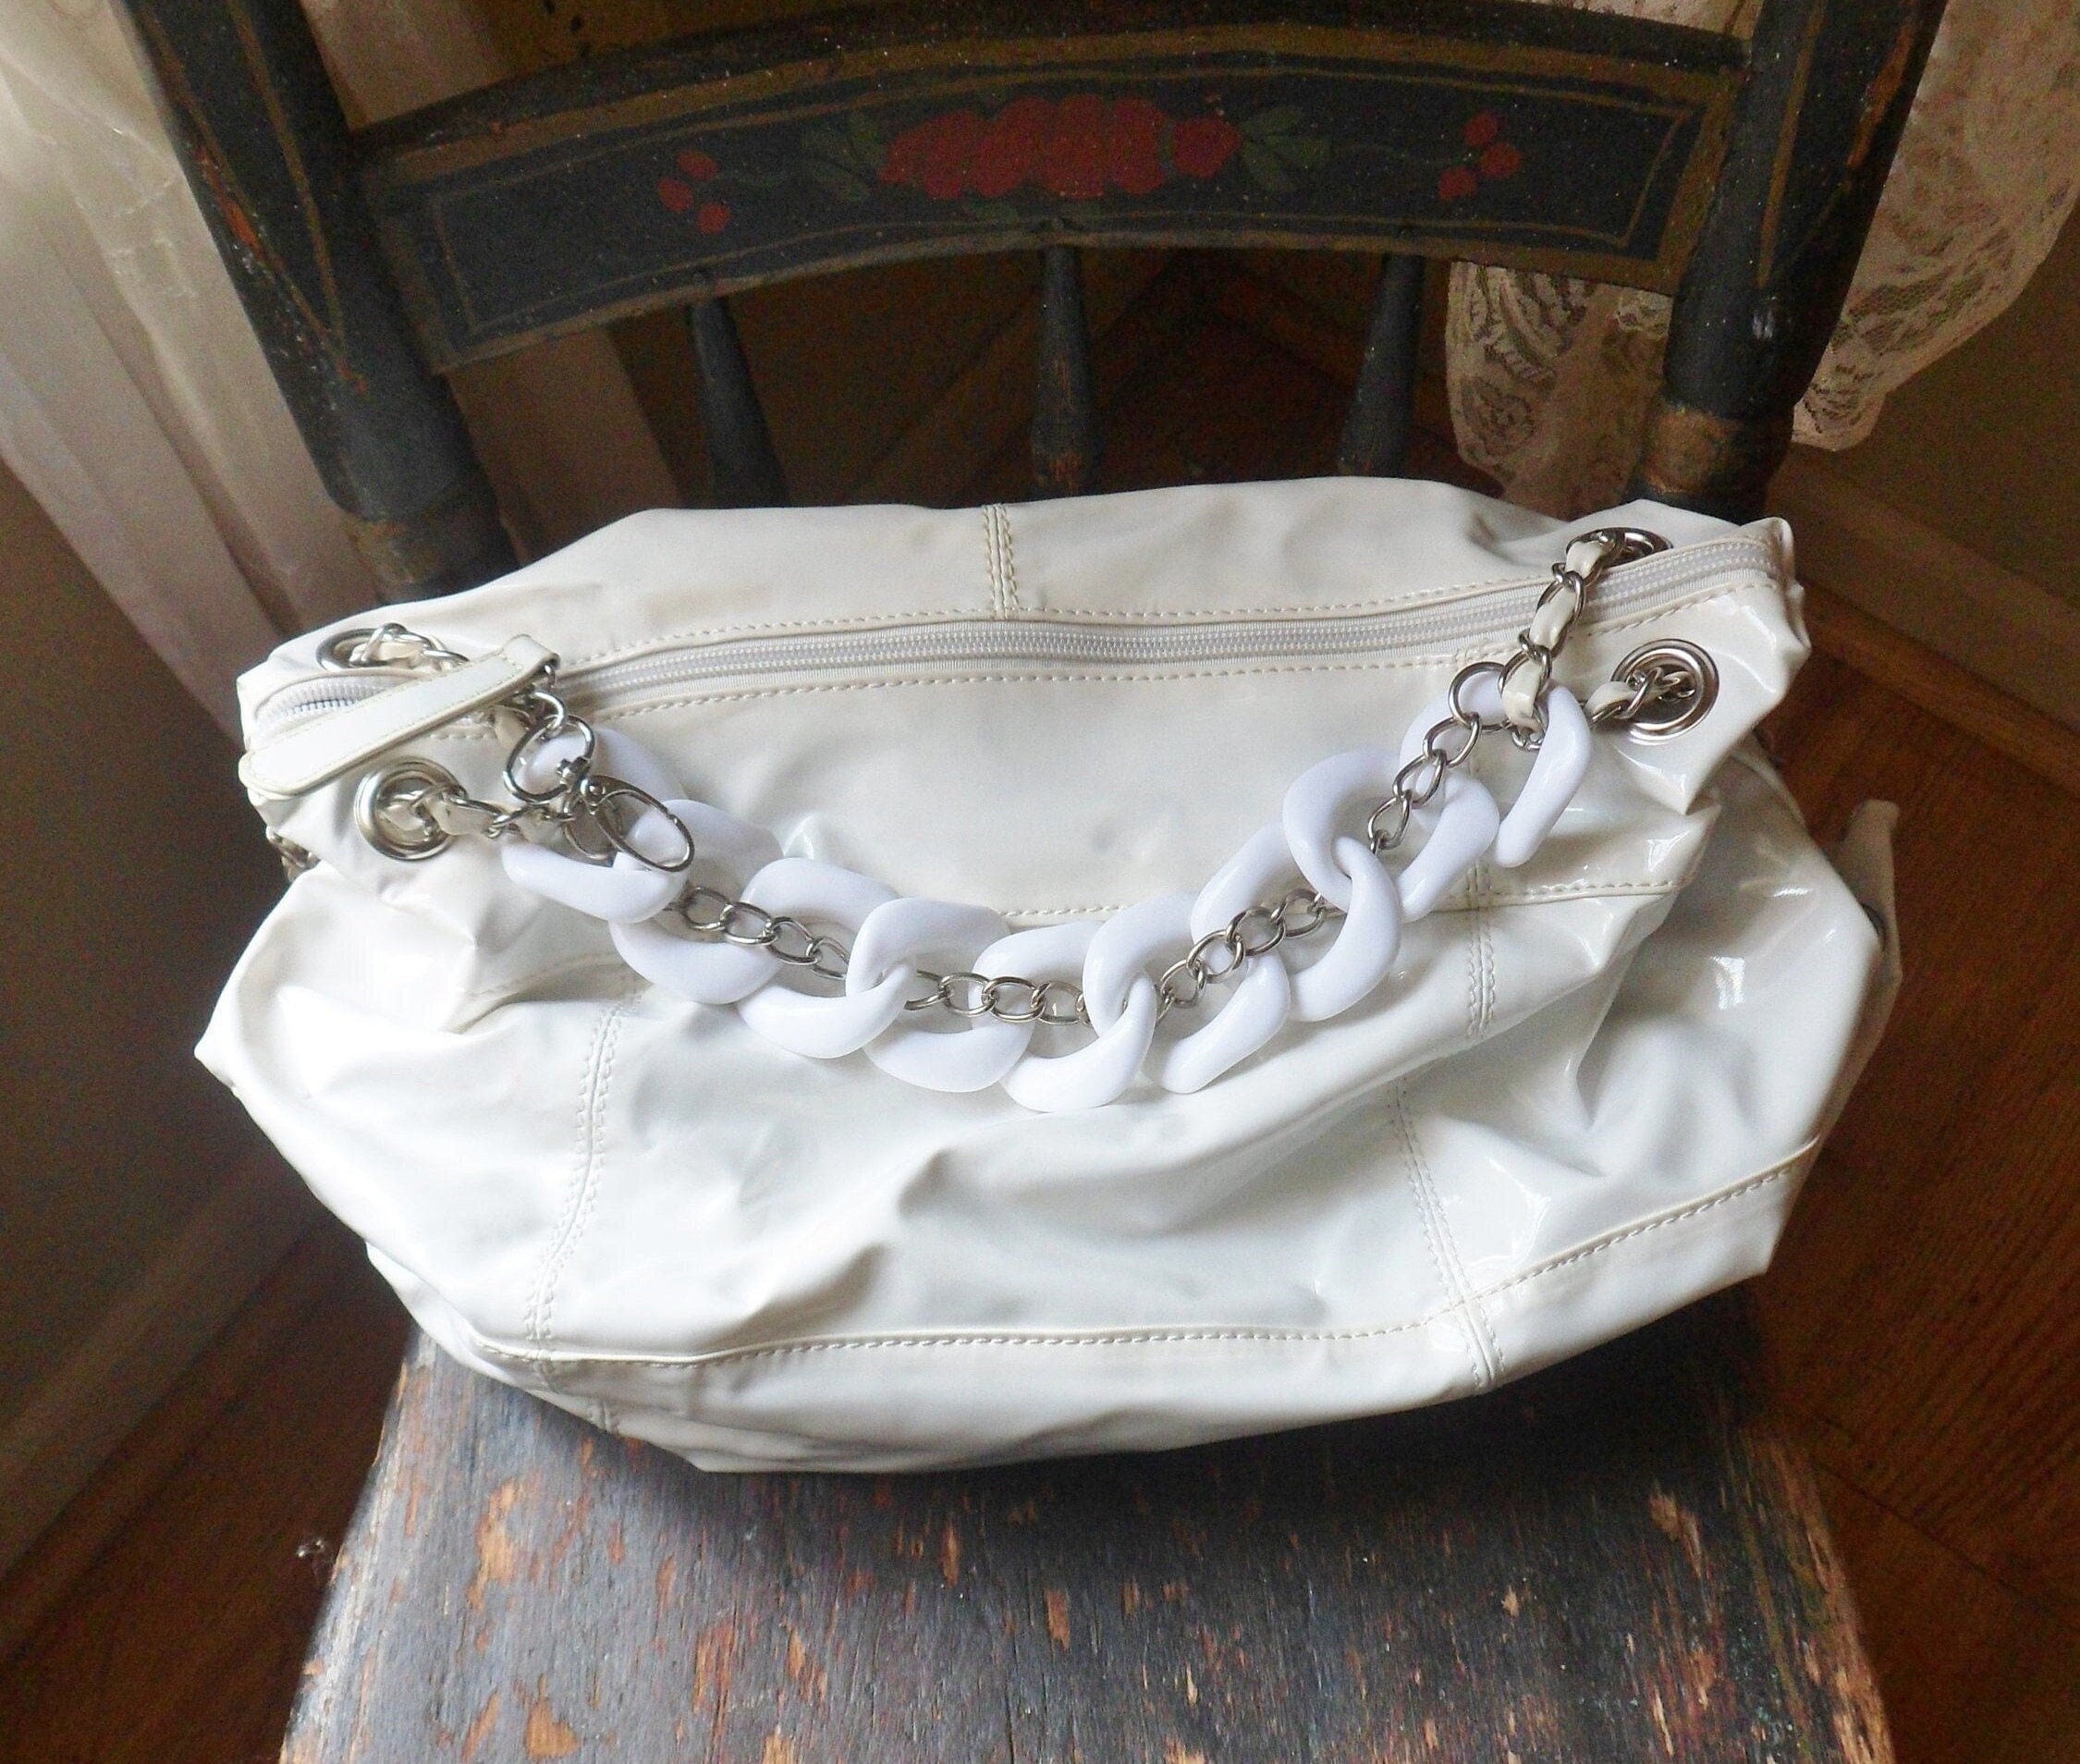 Chanel Mini Metal Cage Bag - Gold Crossbody Bags, Handbags - CHA629636